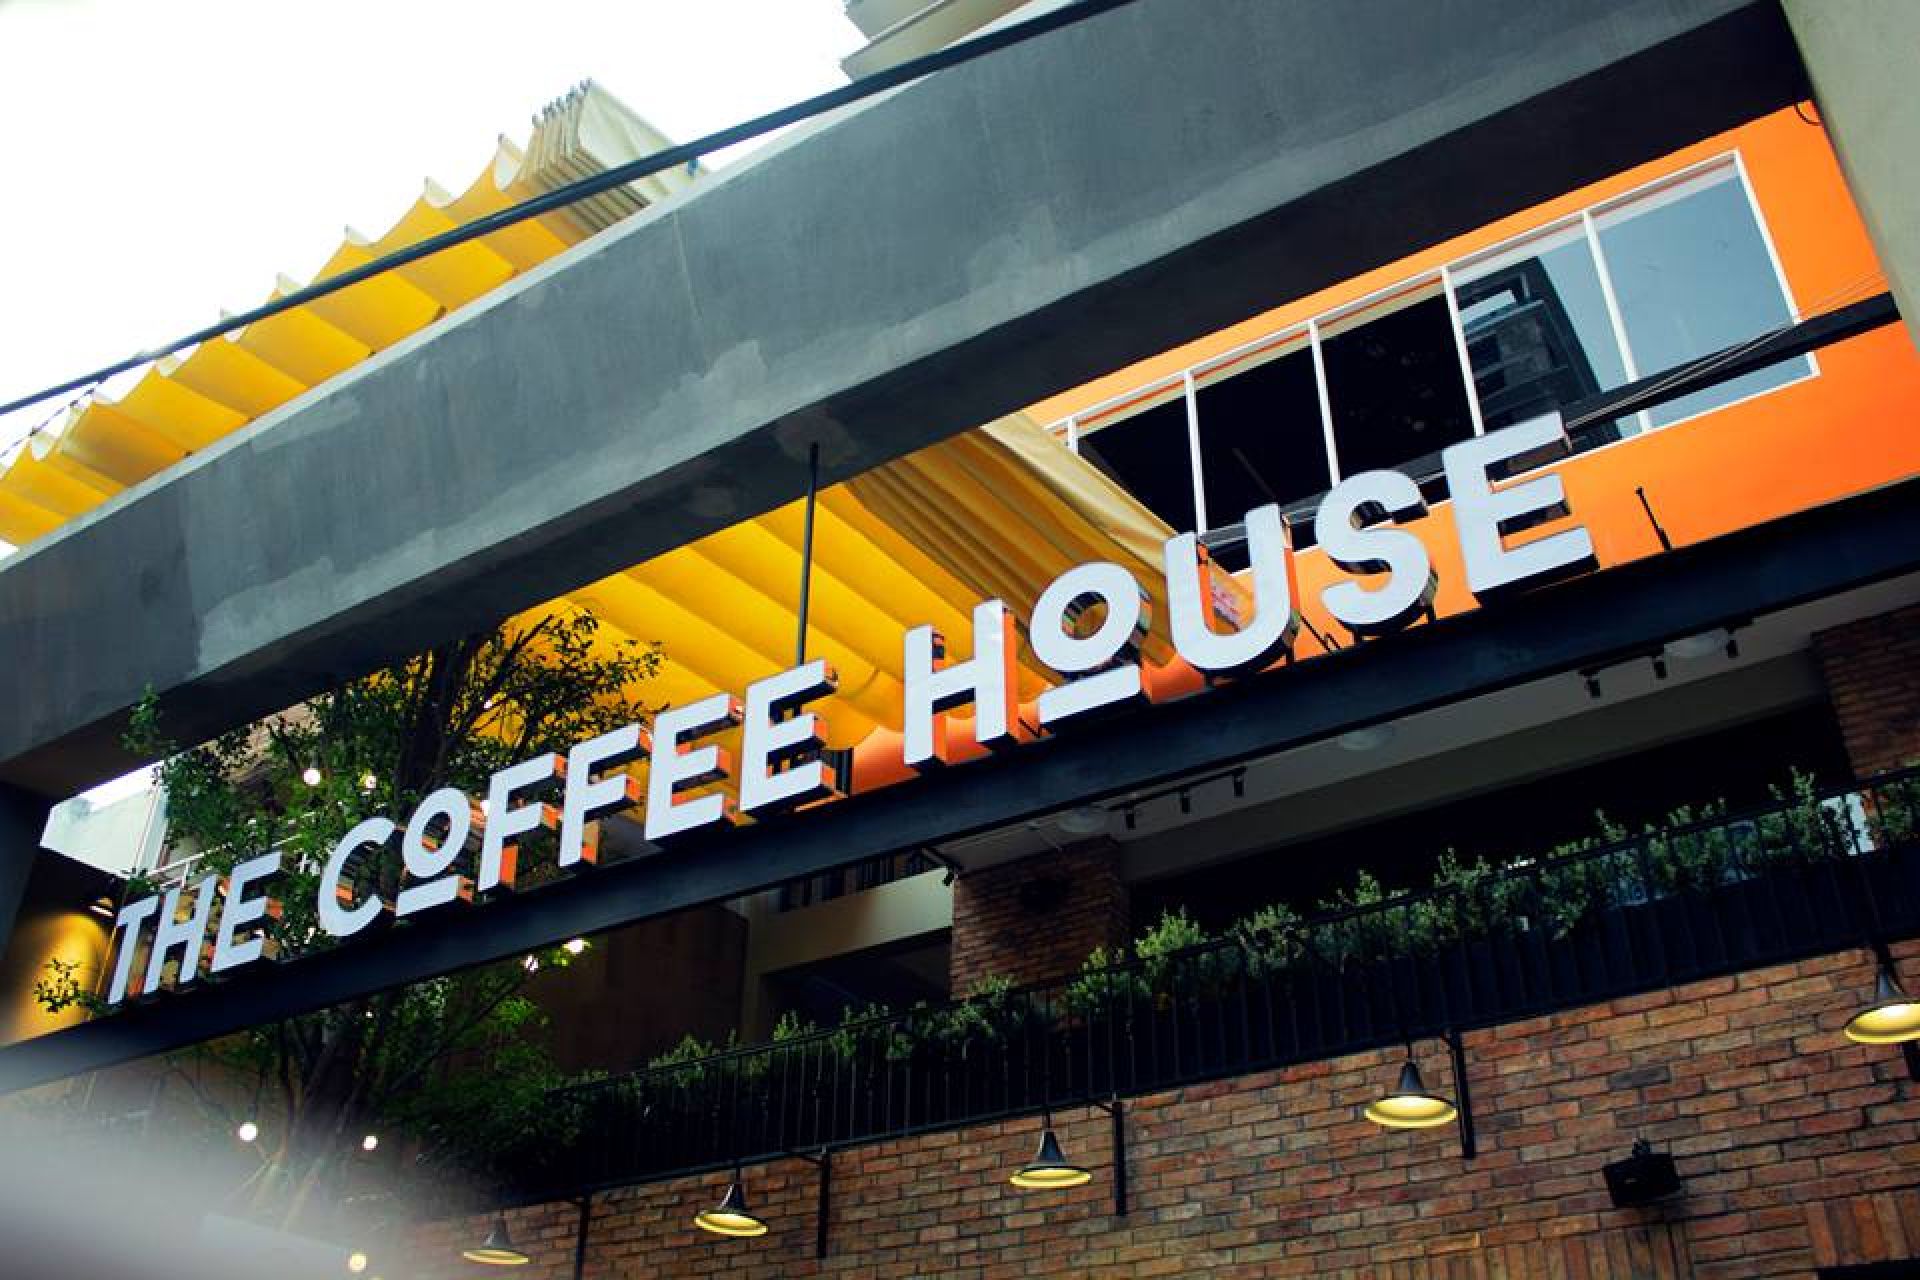 the coffee house